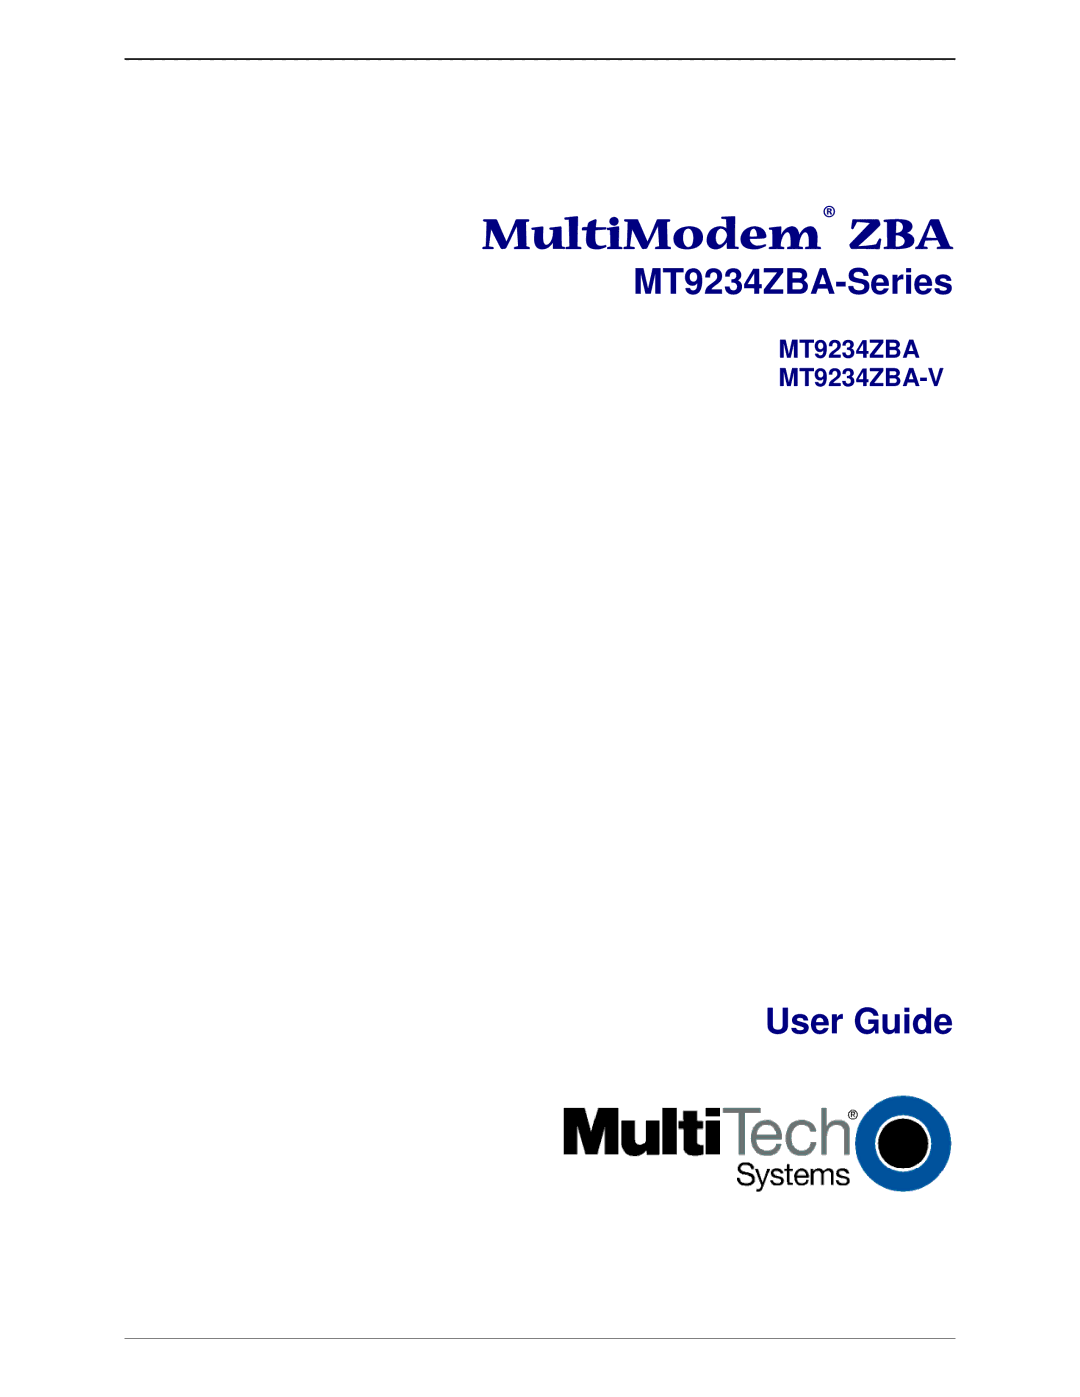 Multi-Tech Systems MT9234ZBA-V manual MultiModem ZBA 